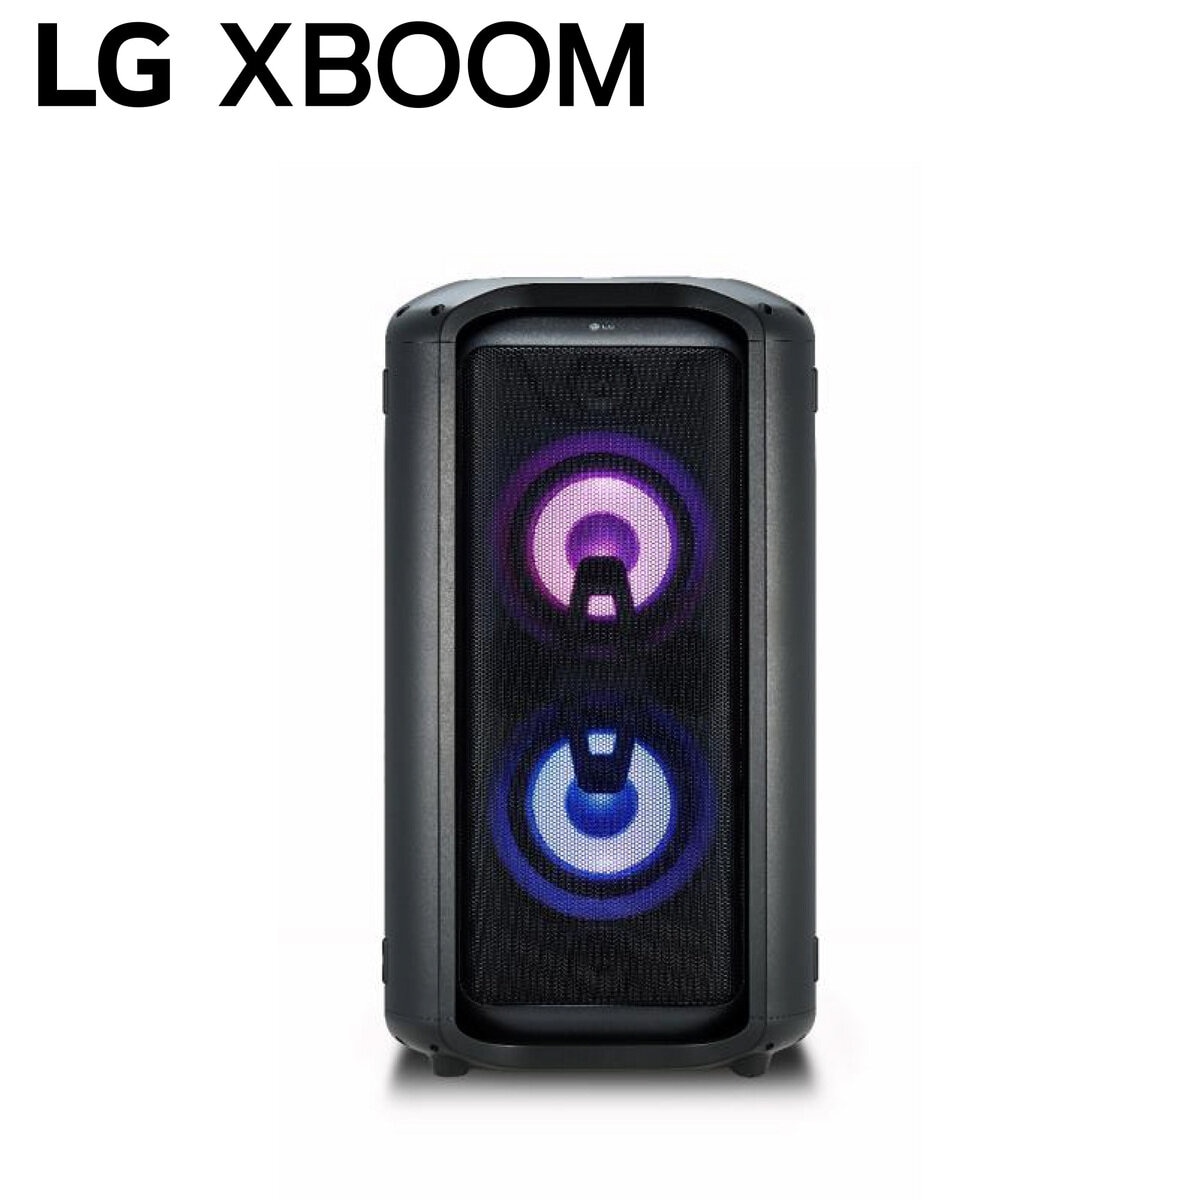 LG 大迫力 XBOOM RK7 Bluetoothワイヤレススピーカー - スピーカー